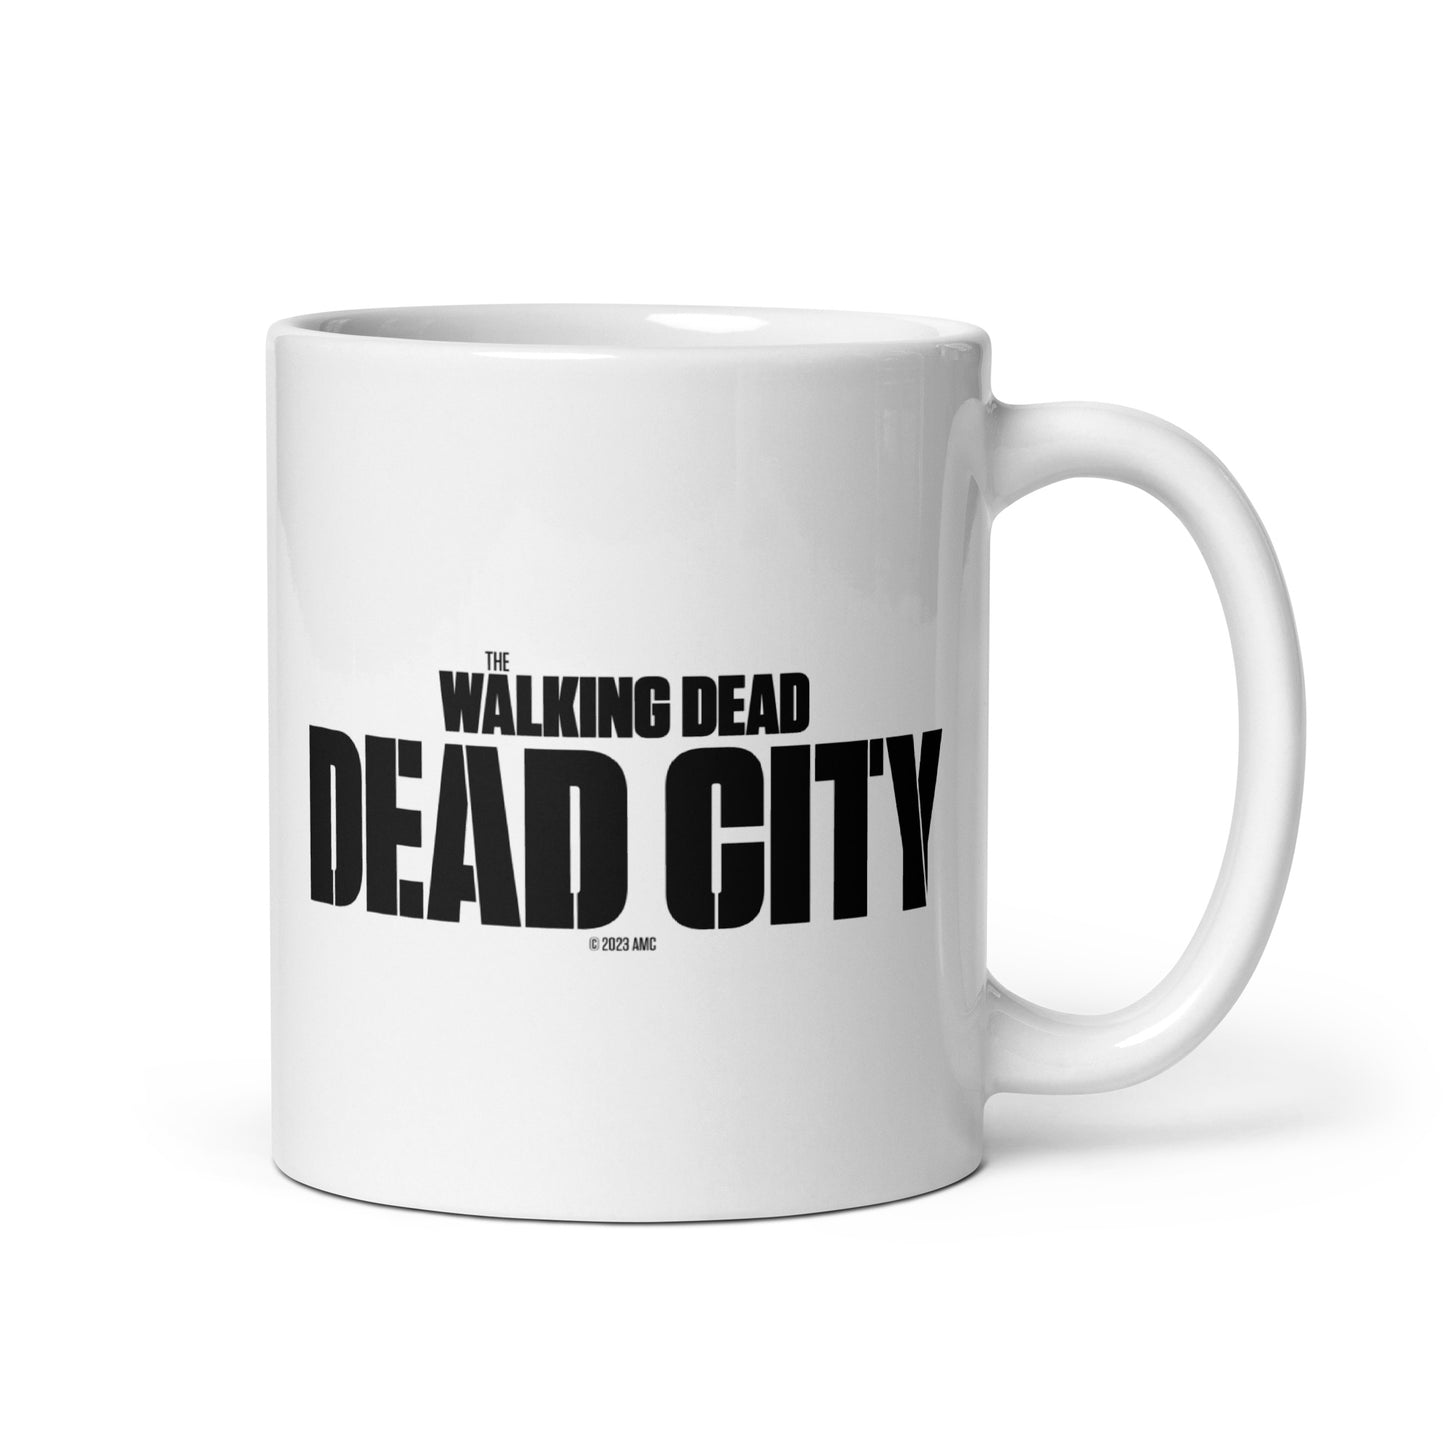 Dead City Dead City NYC Mug